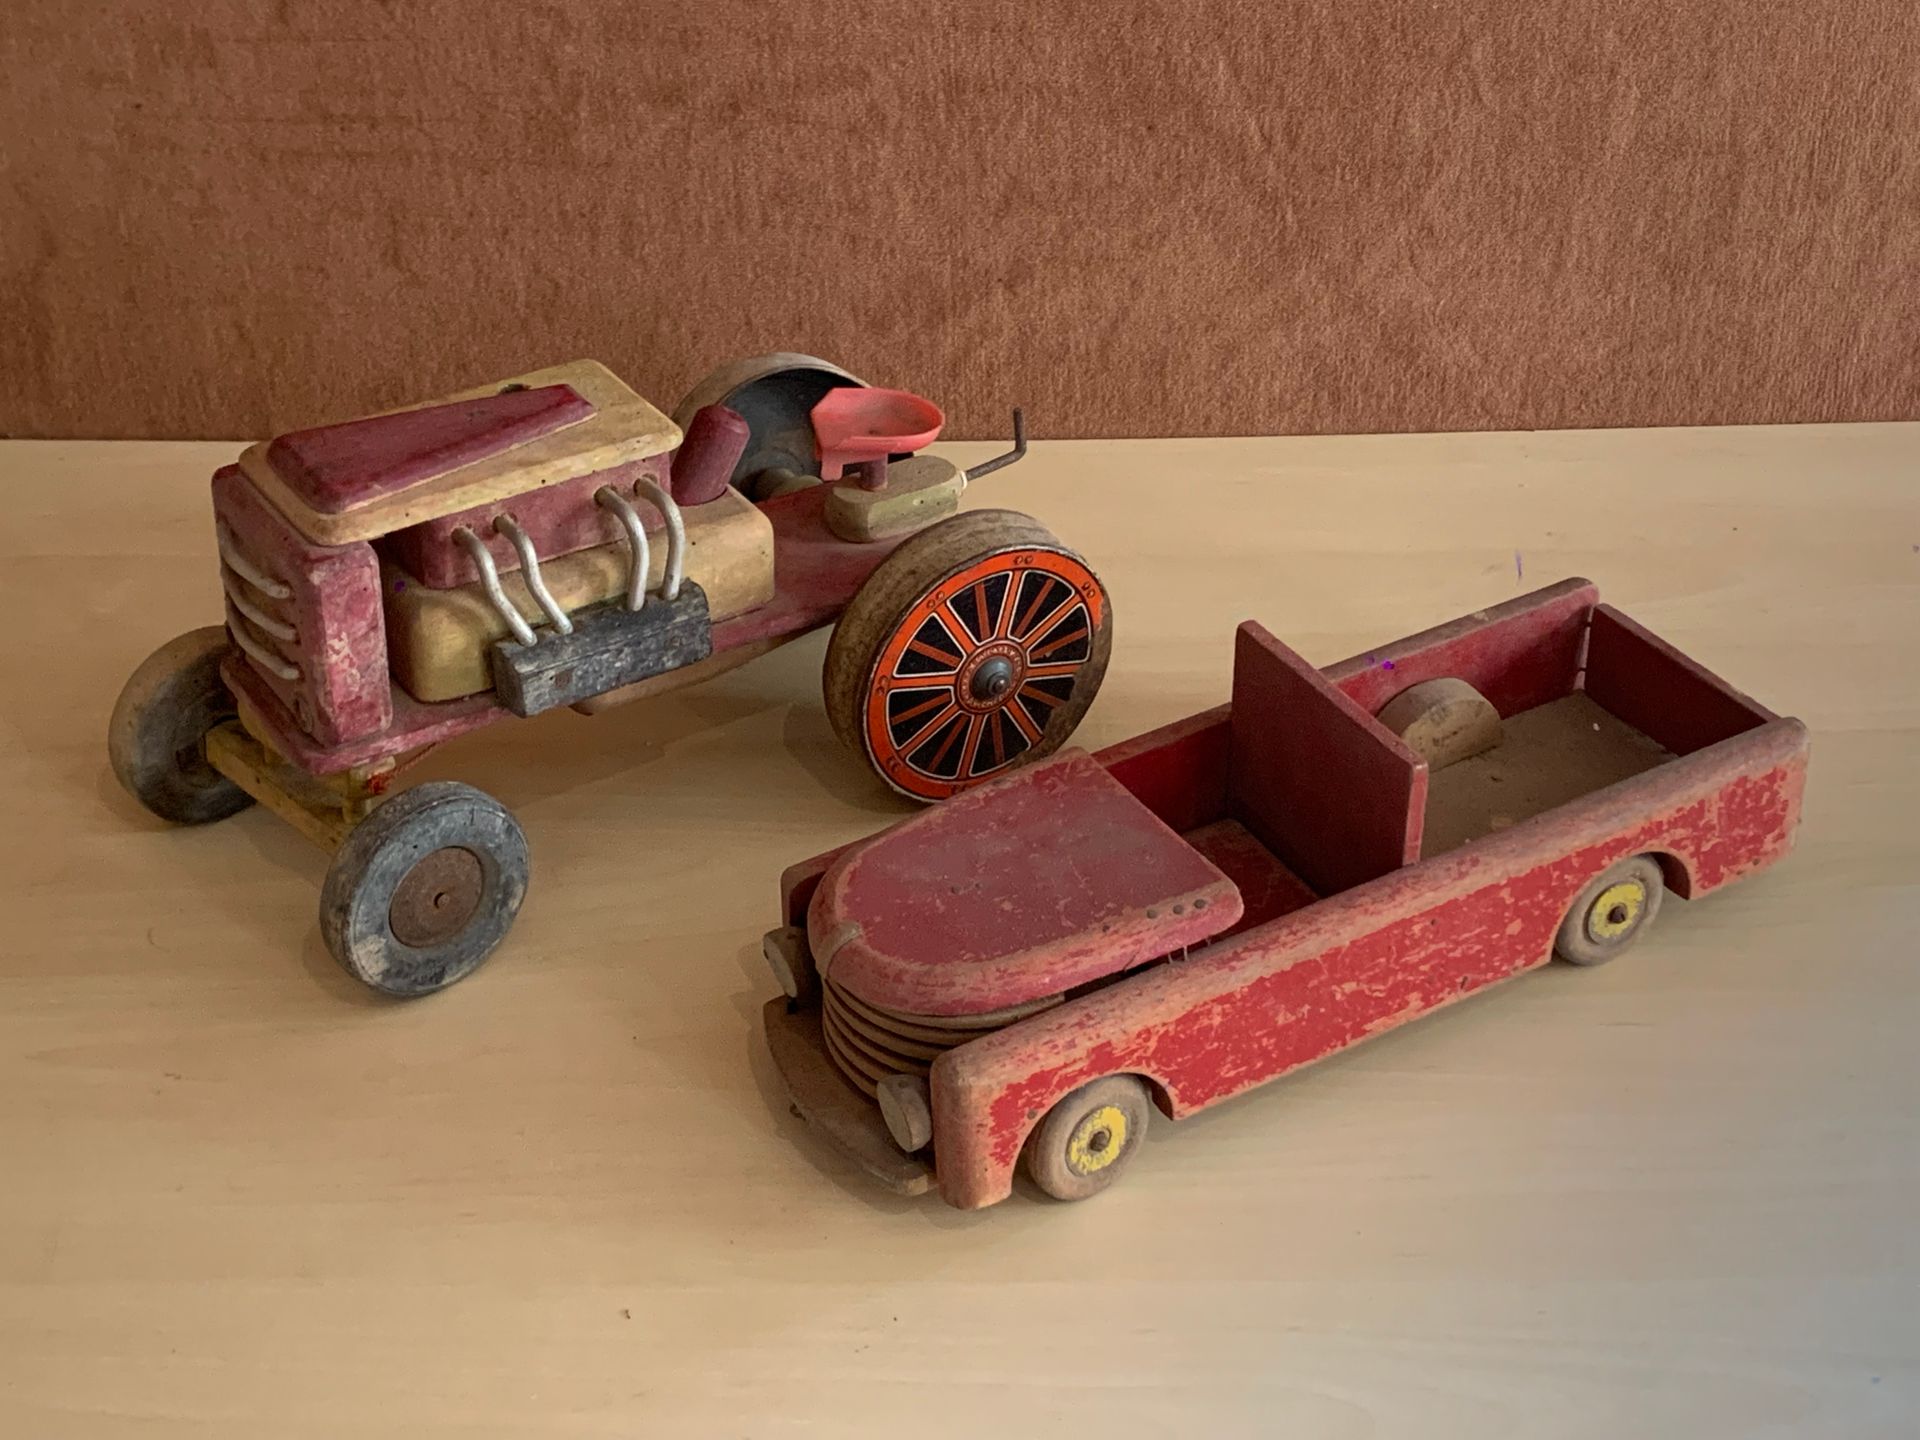 Null 一辆木制汽车 38 x 9 x 12厘米 
一个木制和金属的拖拉机 17 x 33 x 16厘米